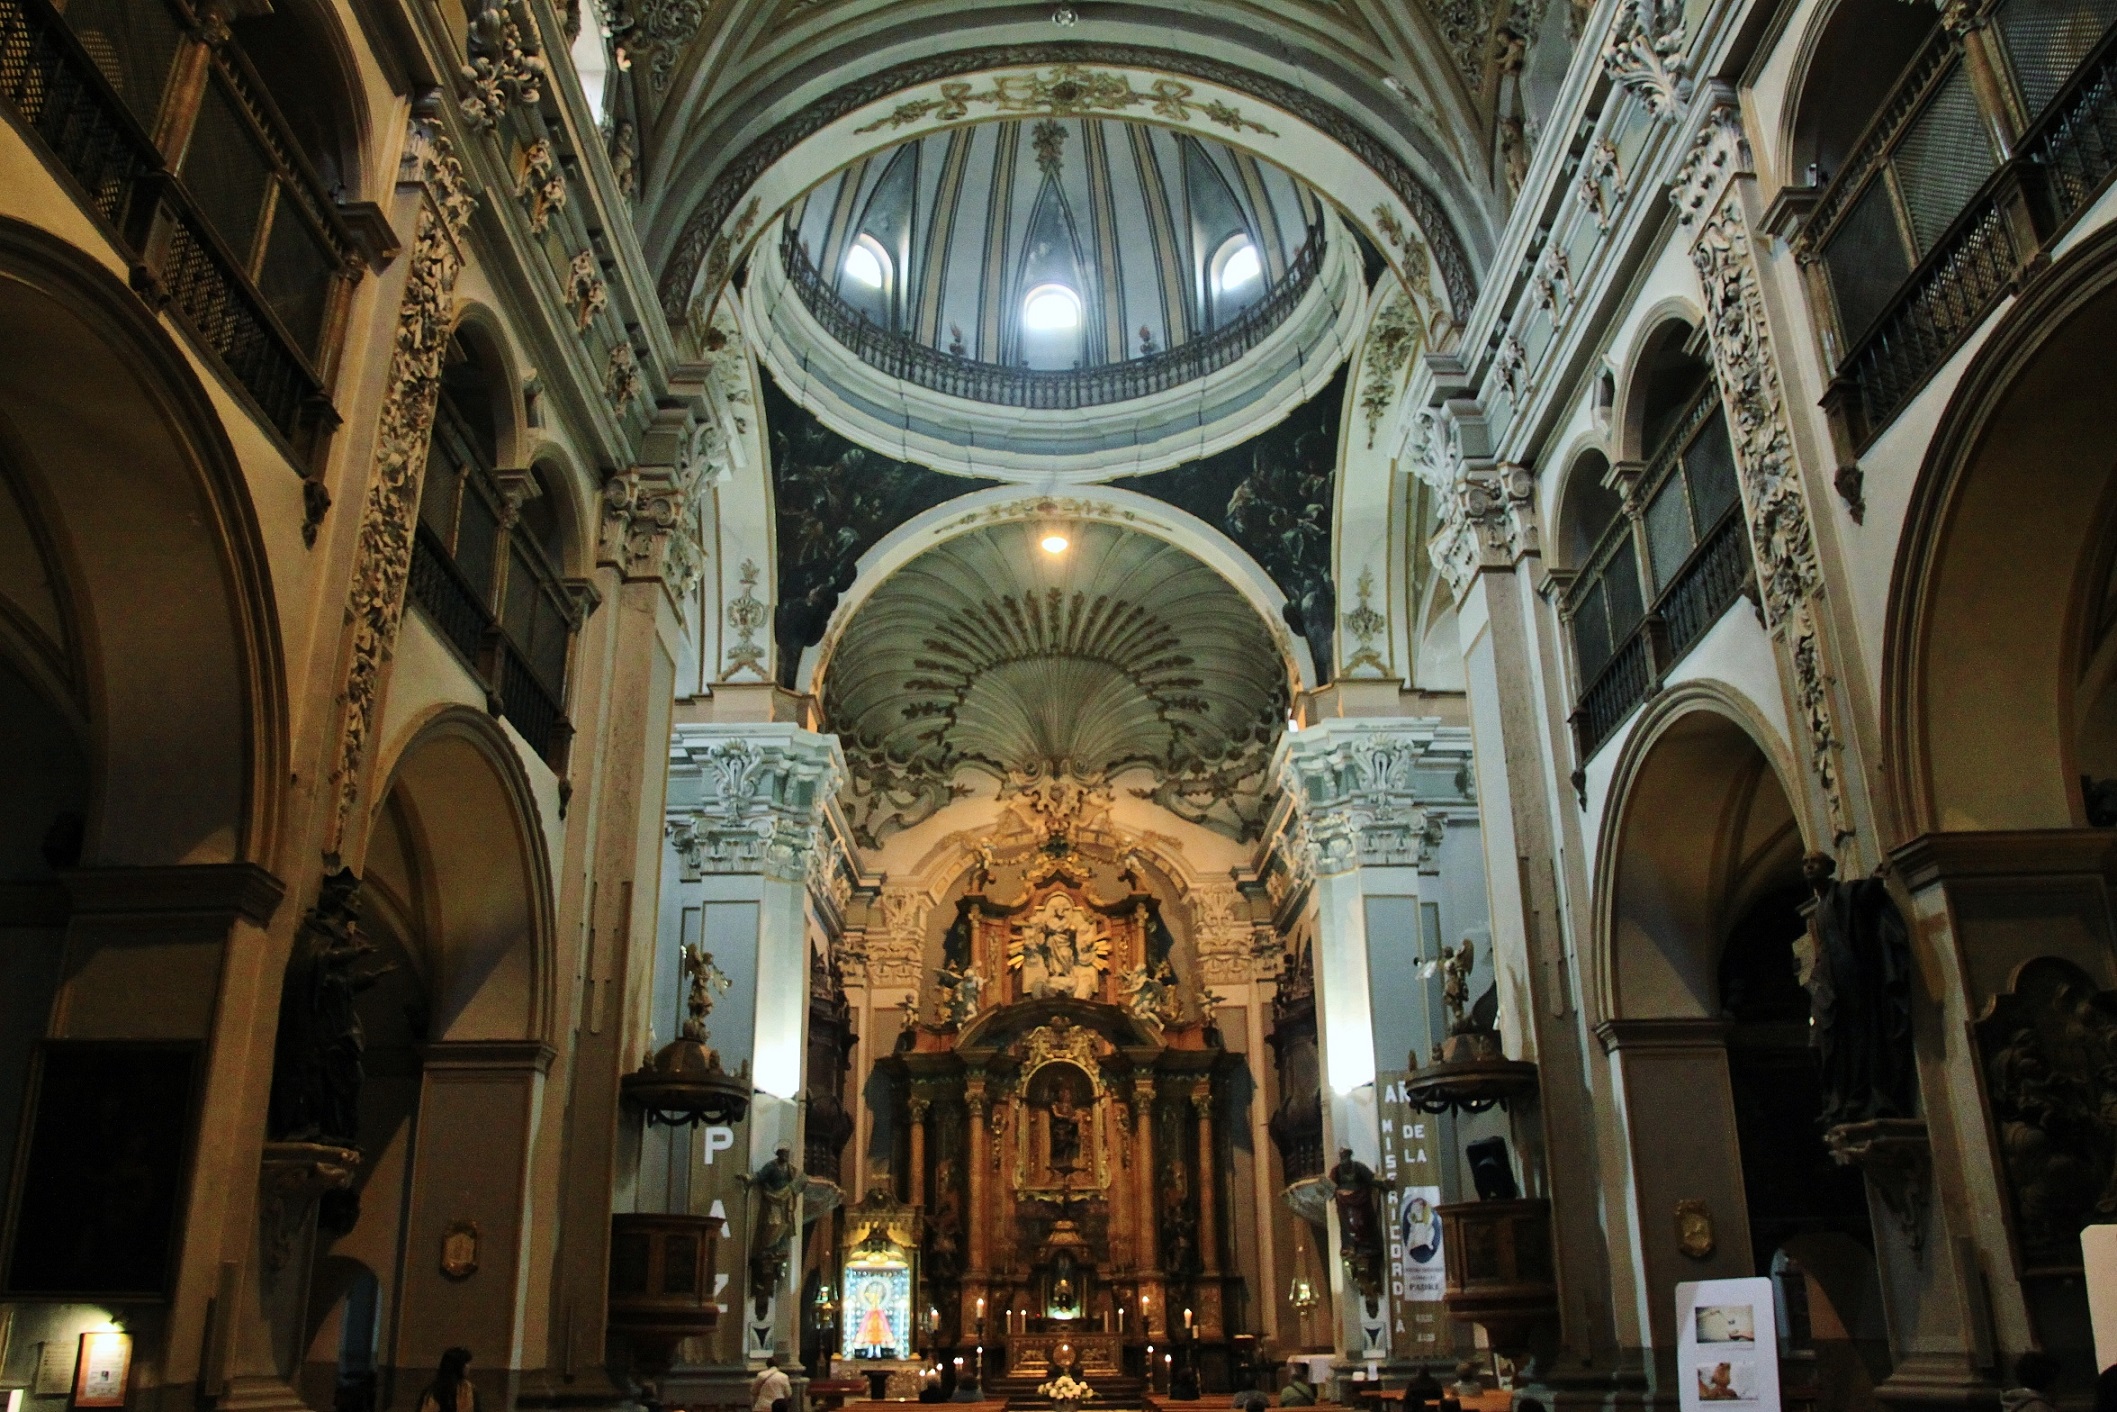 Foto: Iglesia de San Juan - Calatayud (Zaragoza), España